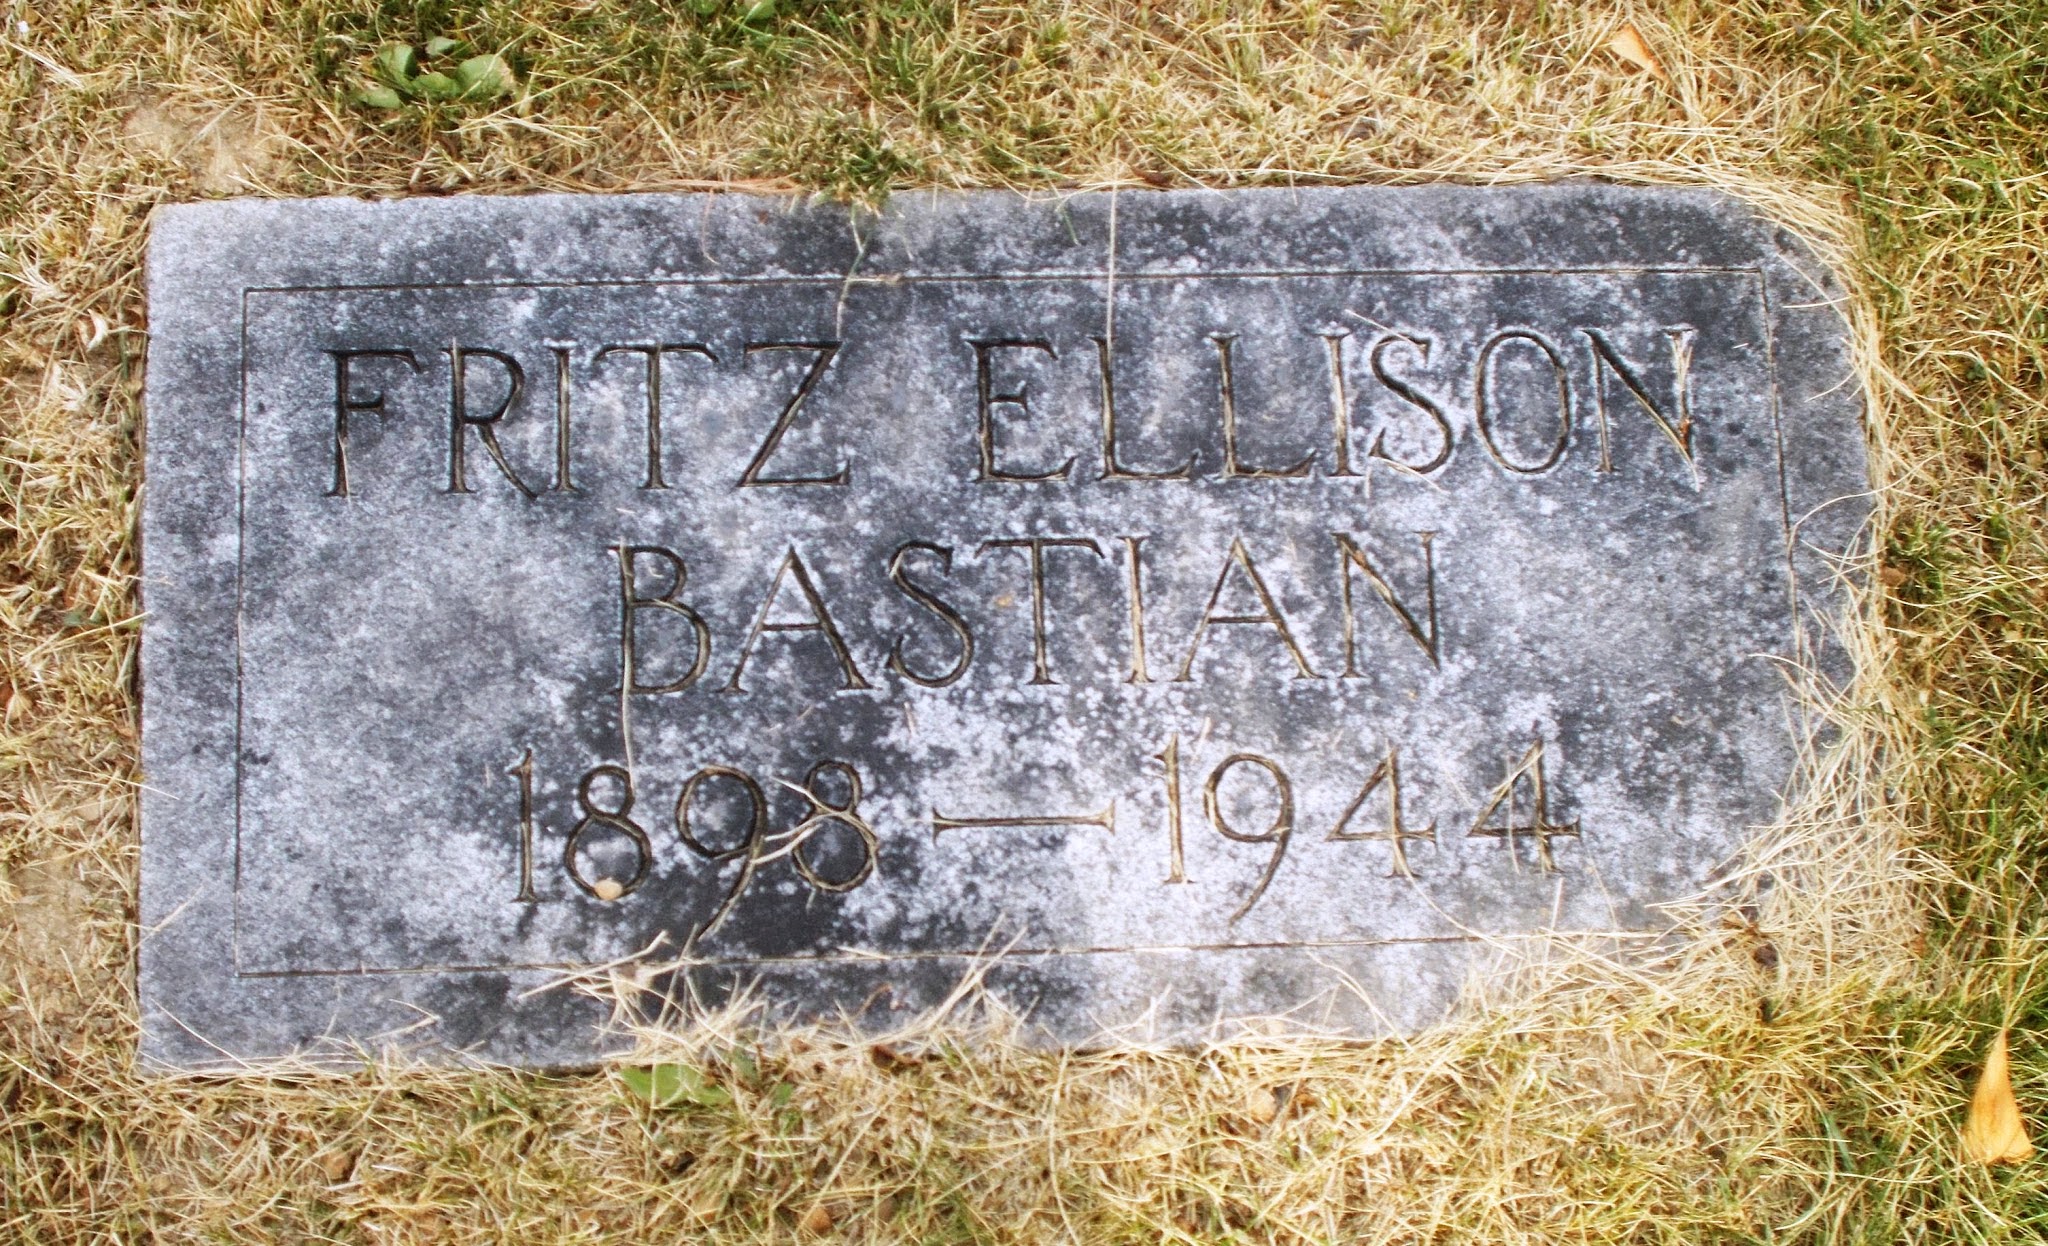 Fritz Ellison Bastian